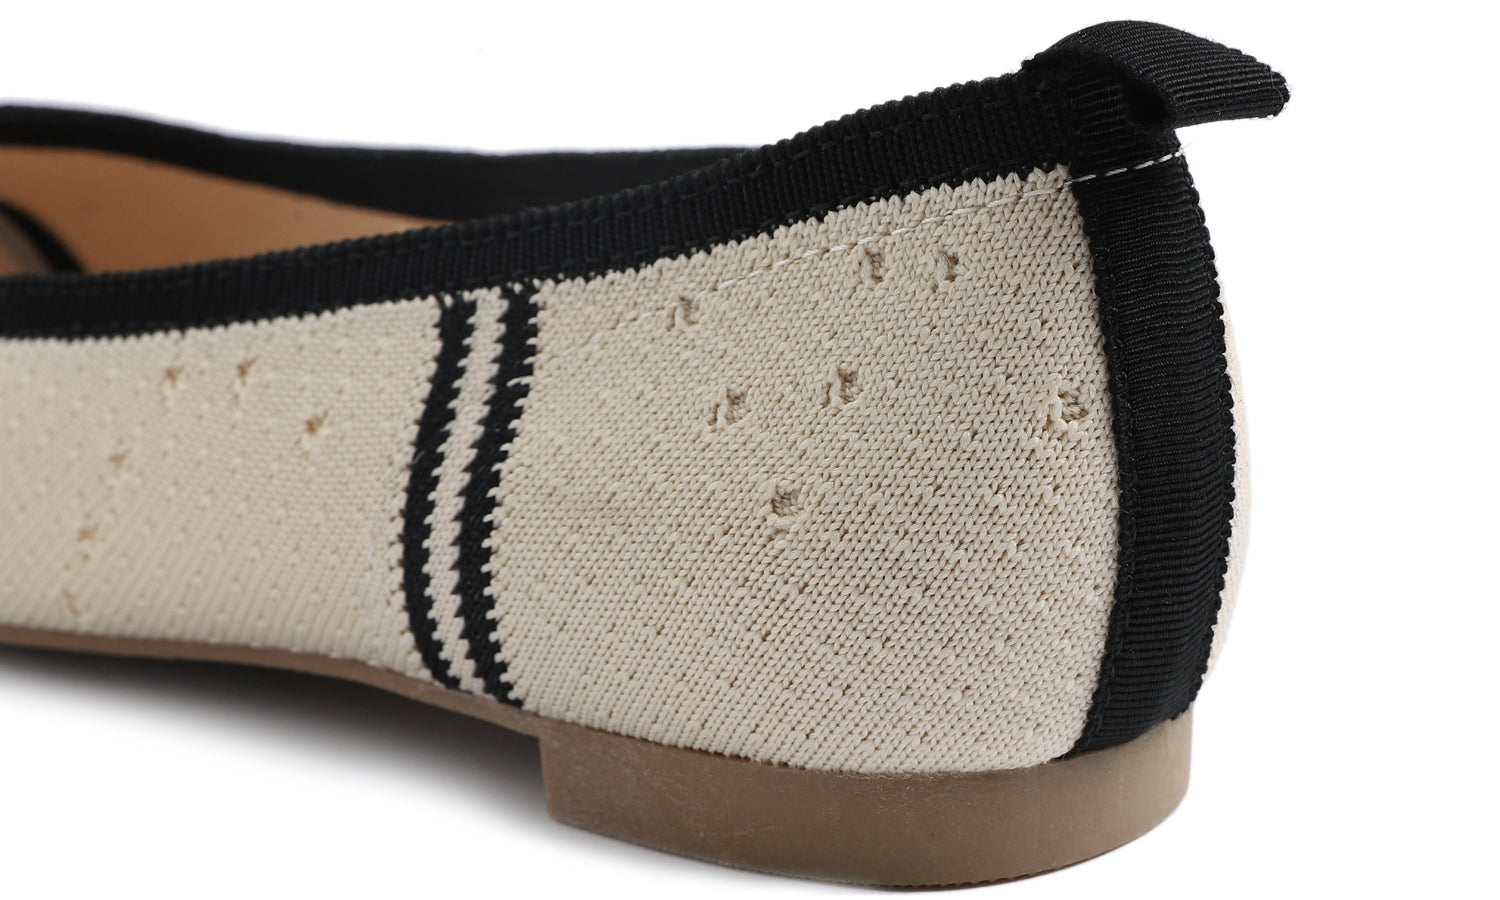 Feversole Women's Woven Fashion Breathable Knit Flat Shoes Pointed Beige Black Stripe